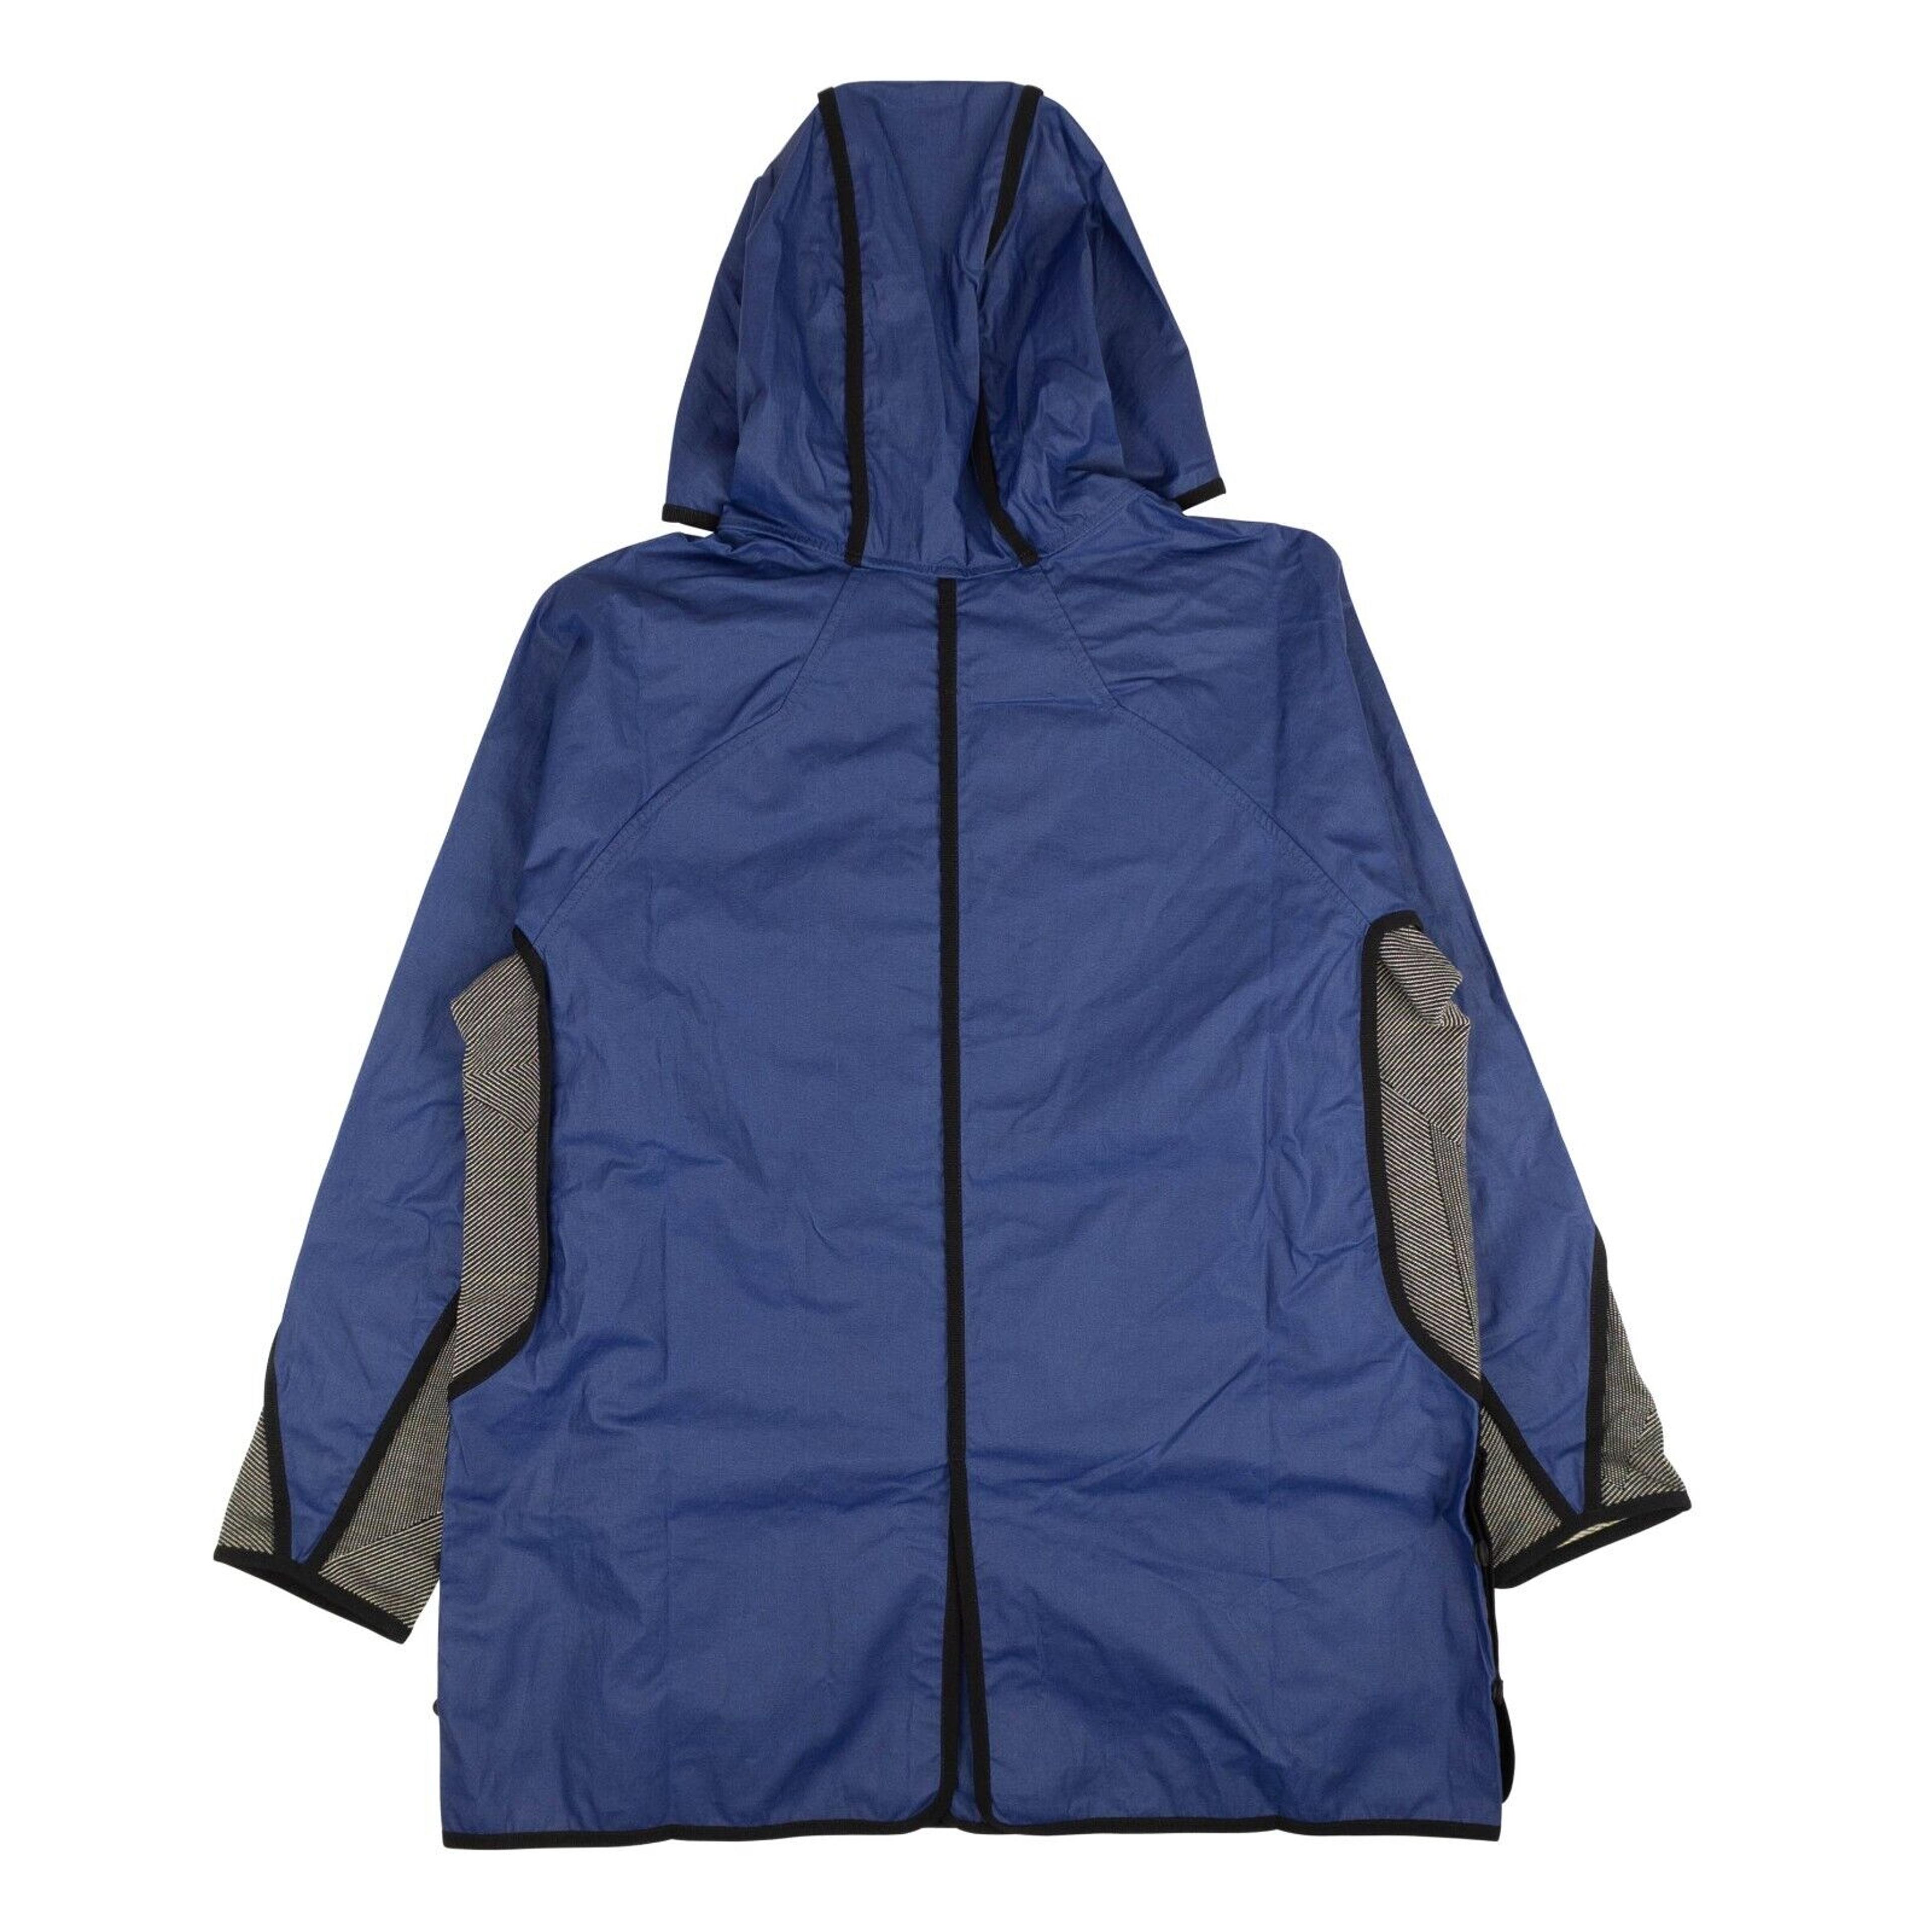 Alternate View 2 of Blue G5 Hooded Jacket